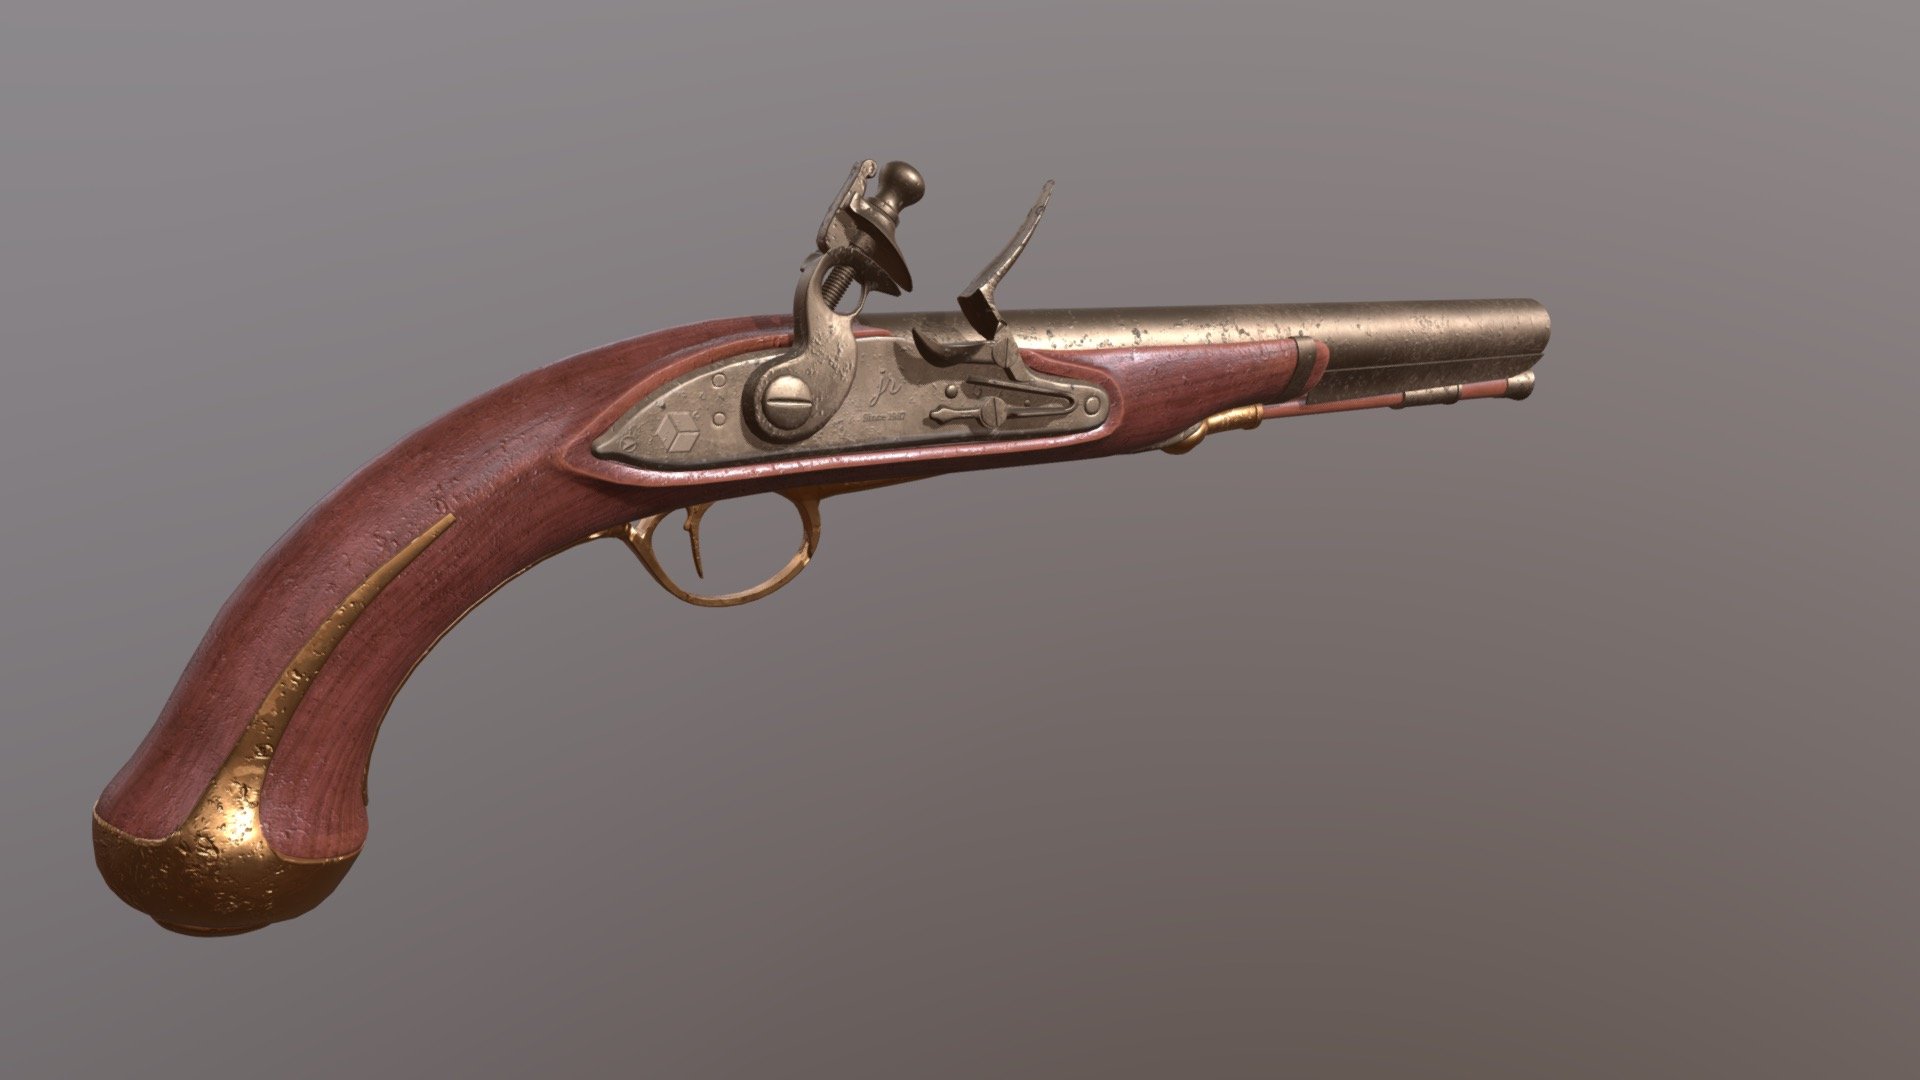 Antique Gun - 3D model by Jesuraja [4a7923e] - Sketchfab